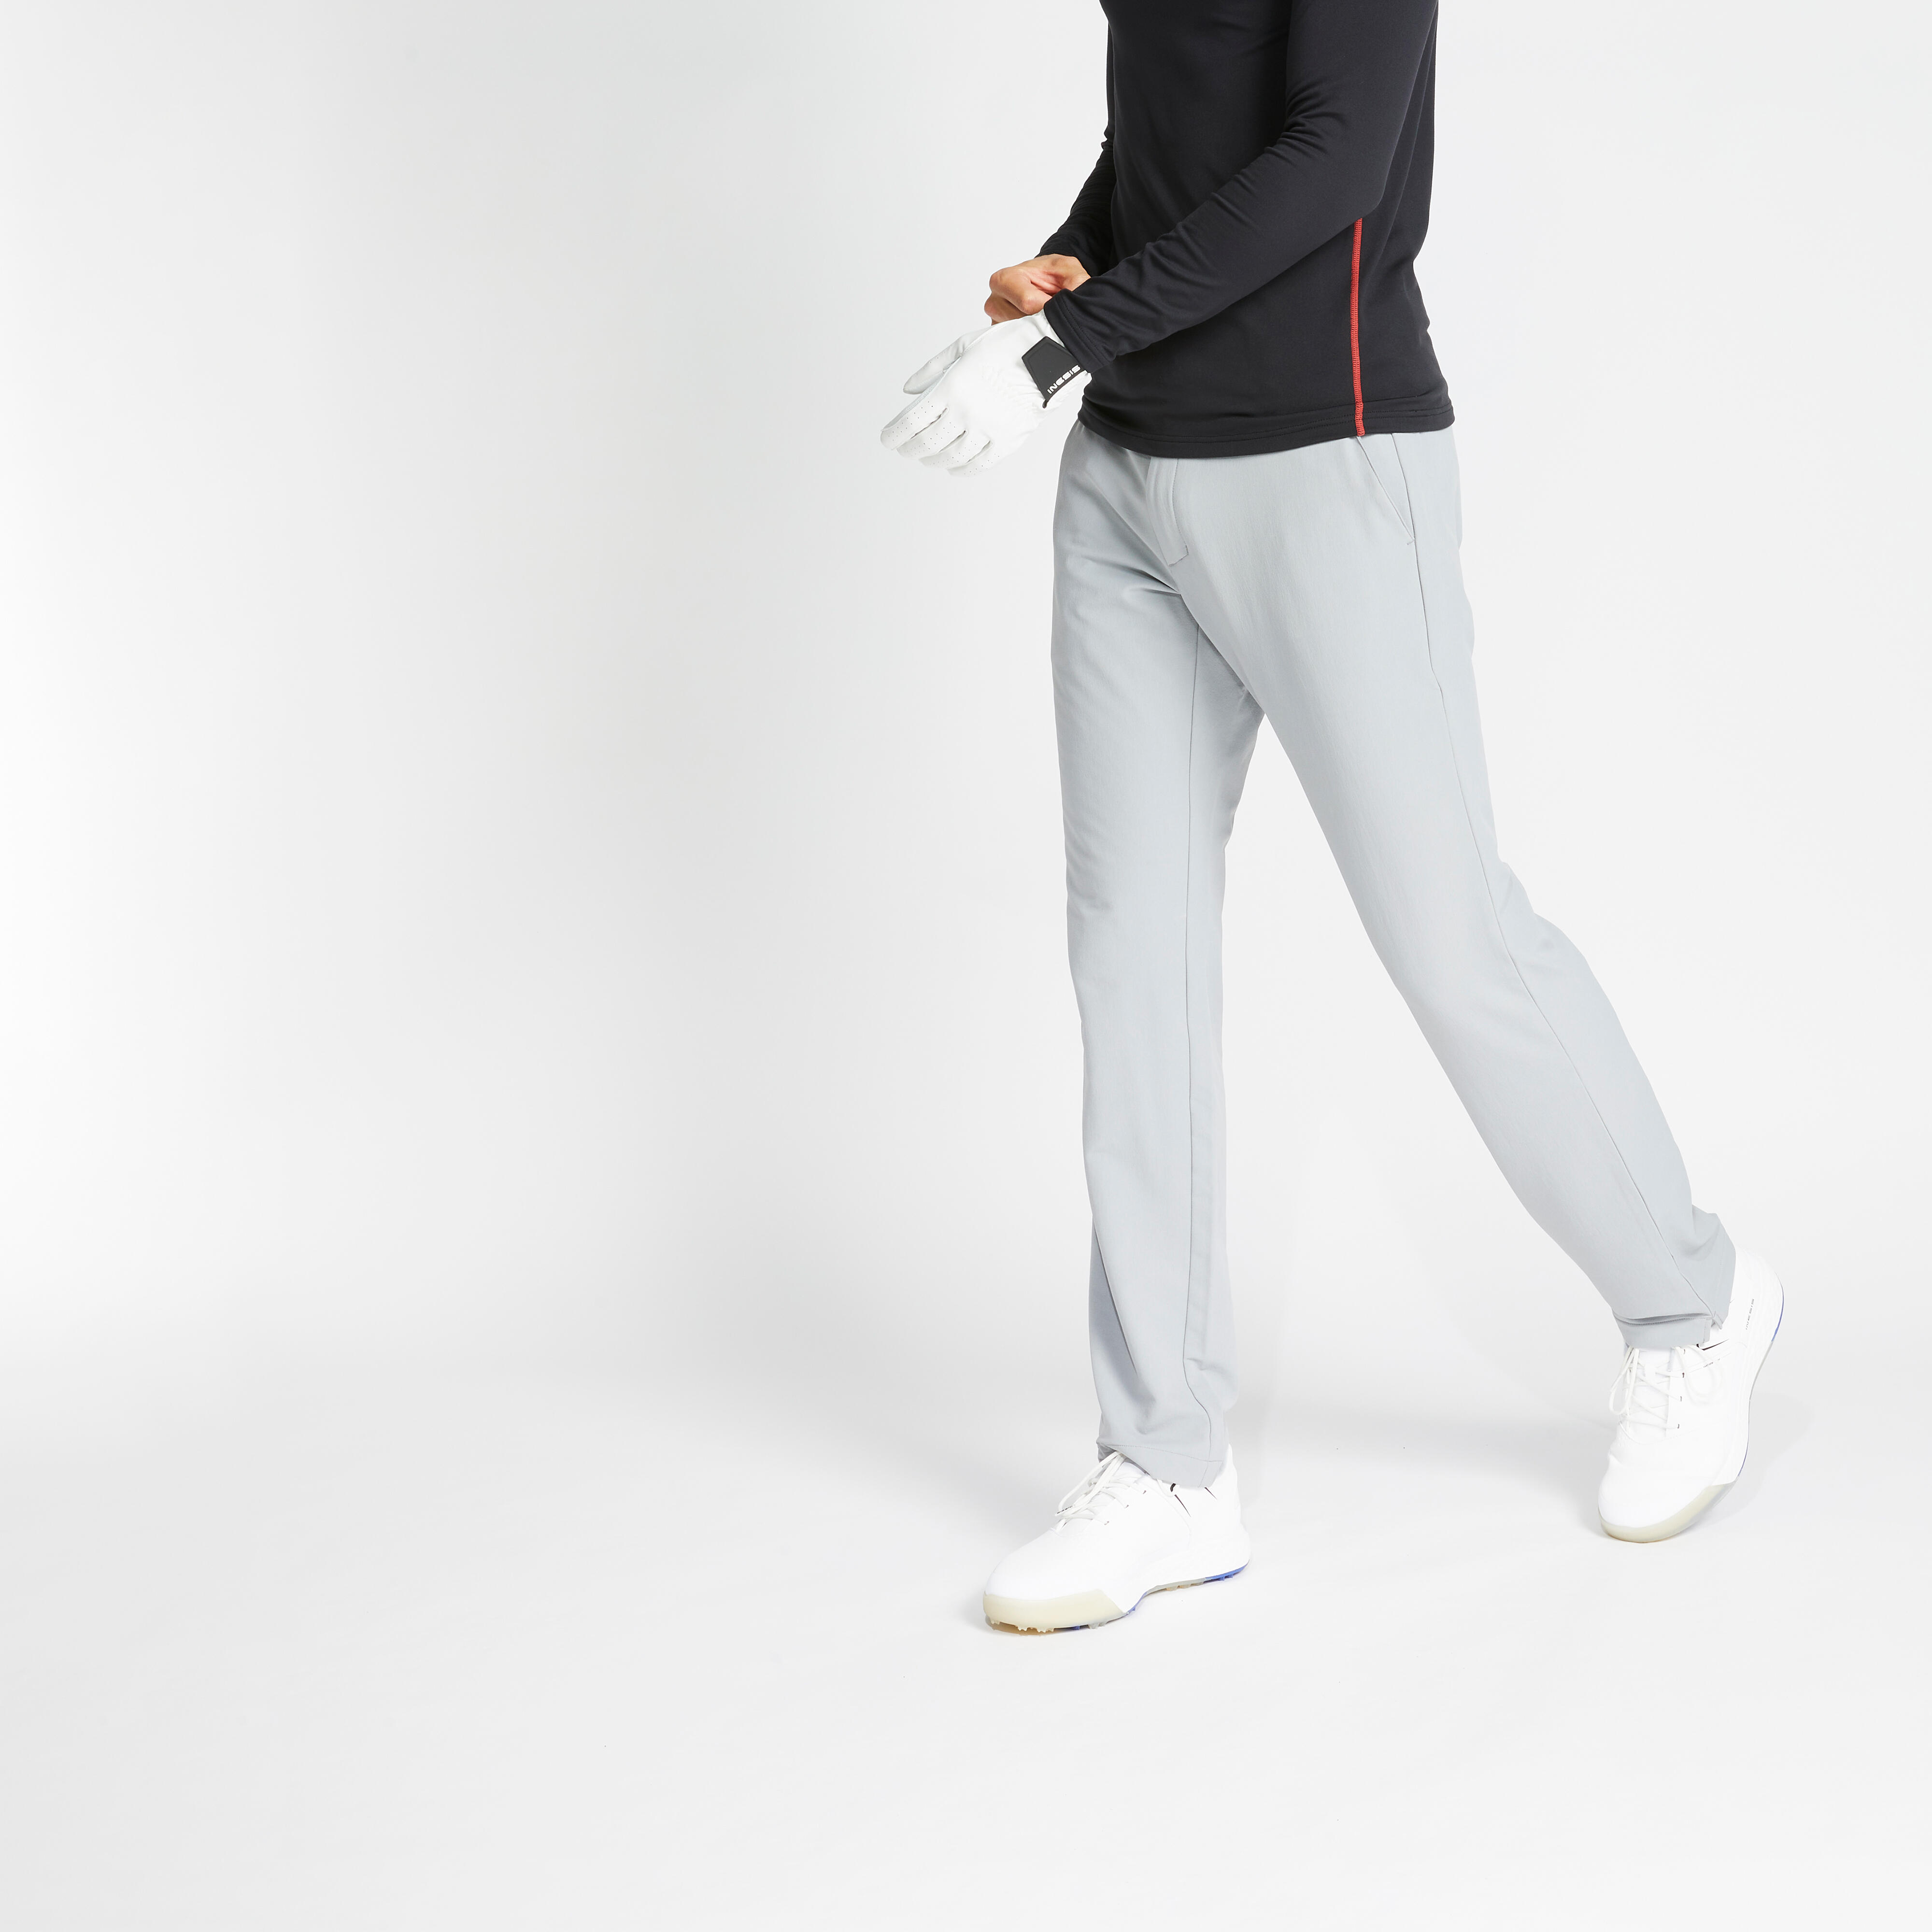 INESIS Decathlon - Pantaloni invernali golf uomo 500 grigi -